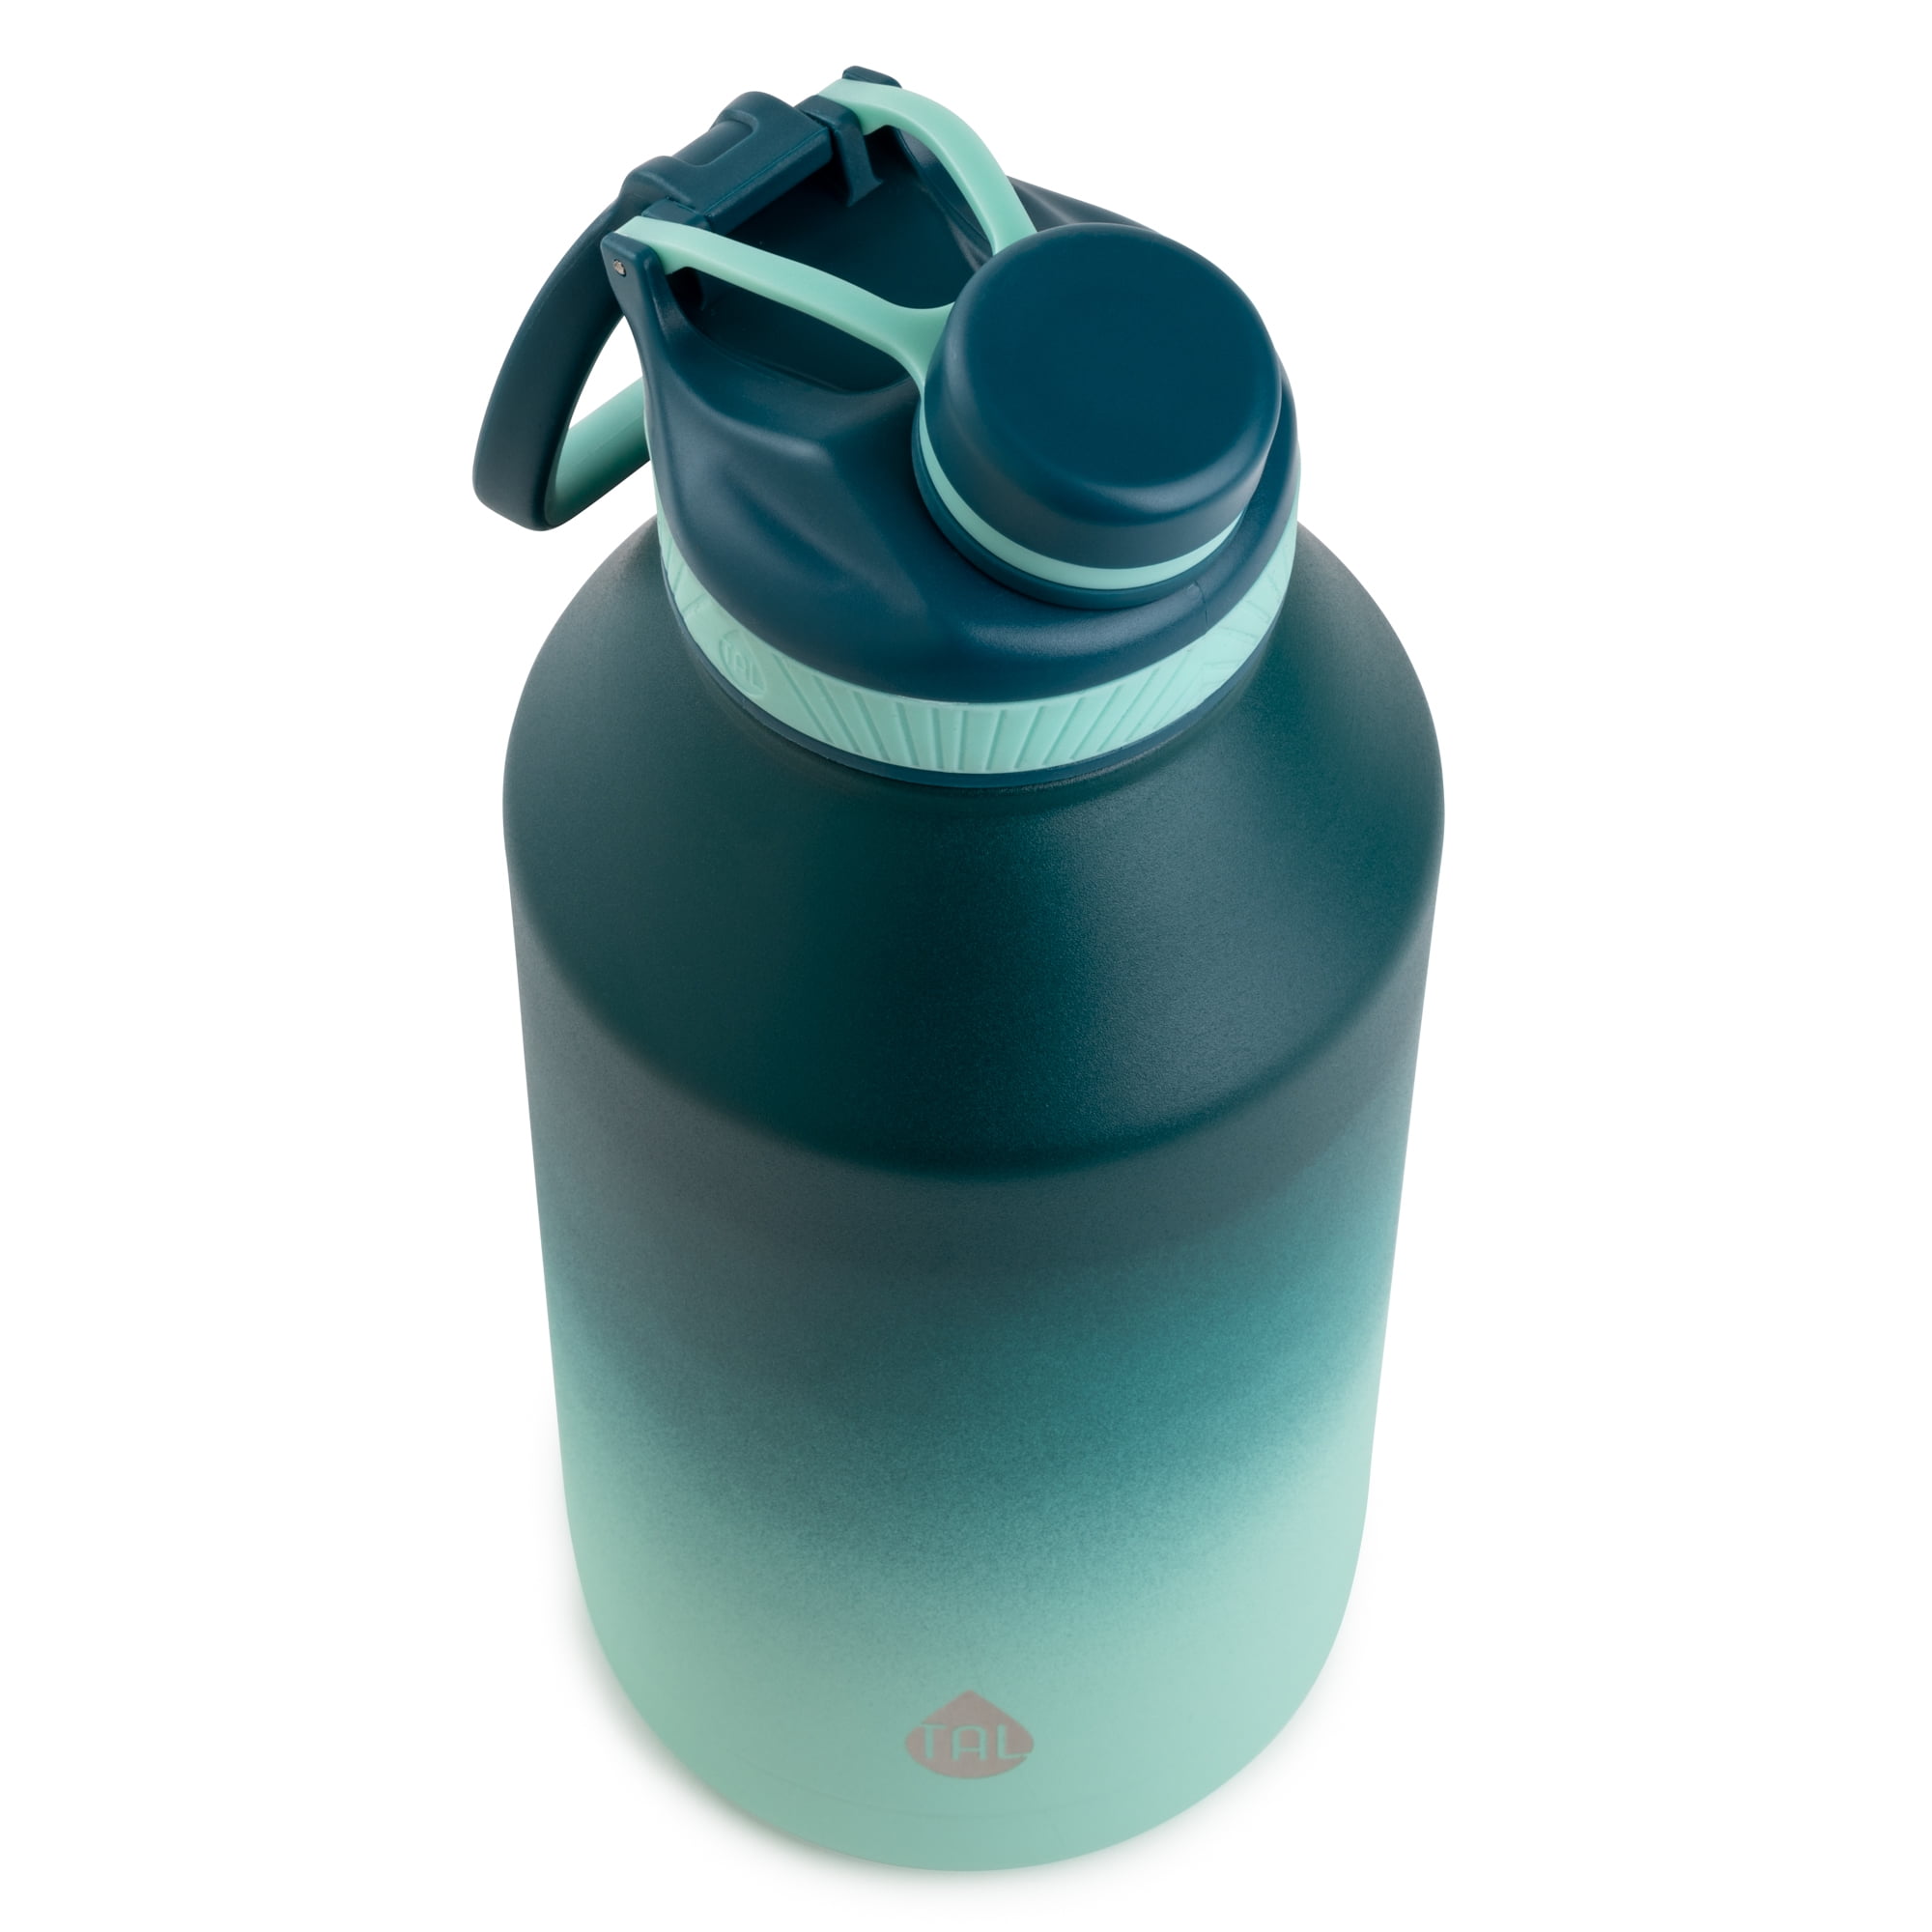 TAL Stainless Steel Ranger Water Bottle 64 fl oz, Gray - Yahoo Shopping